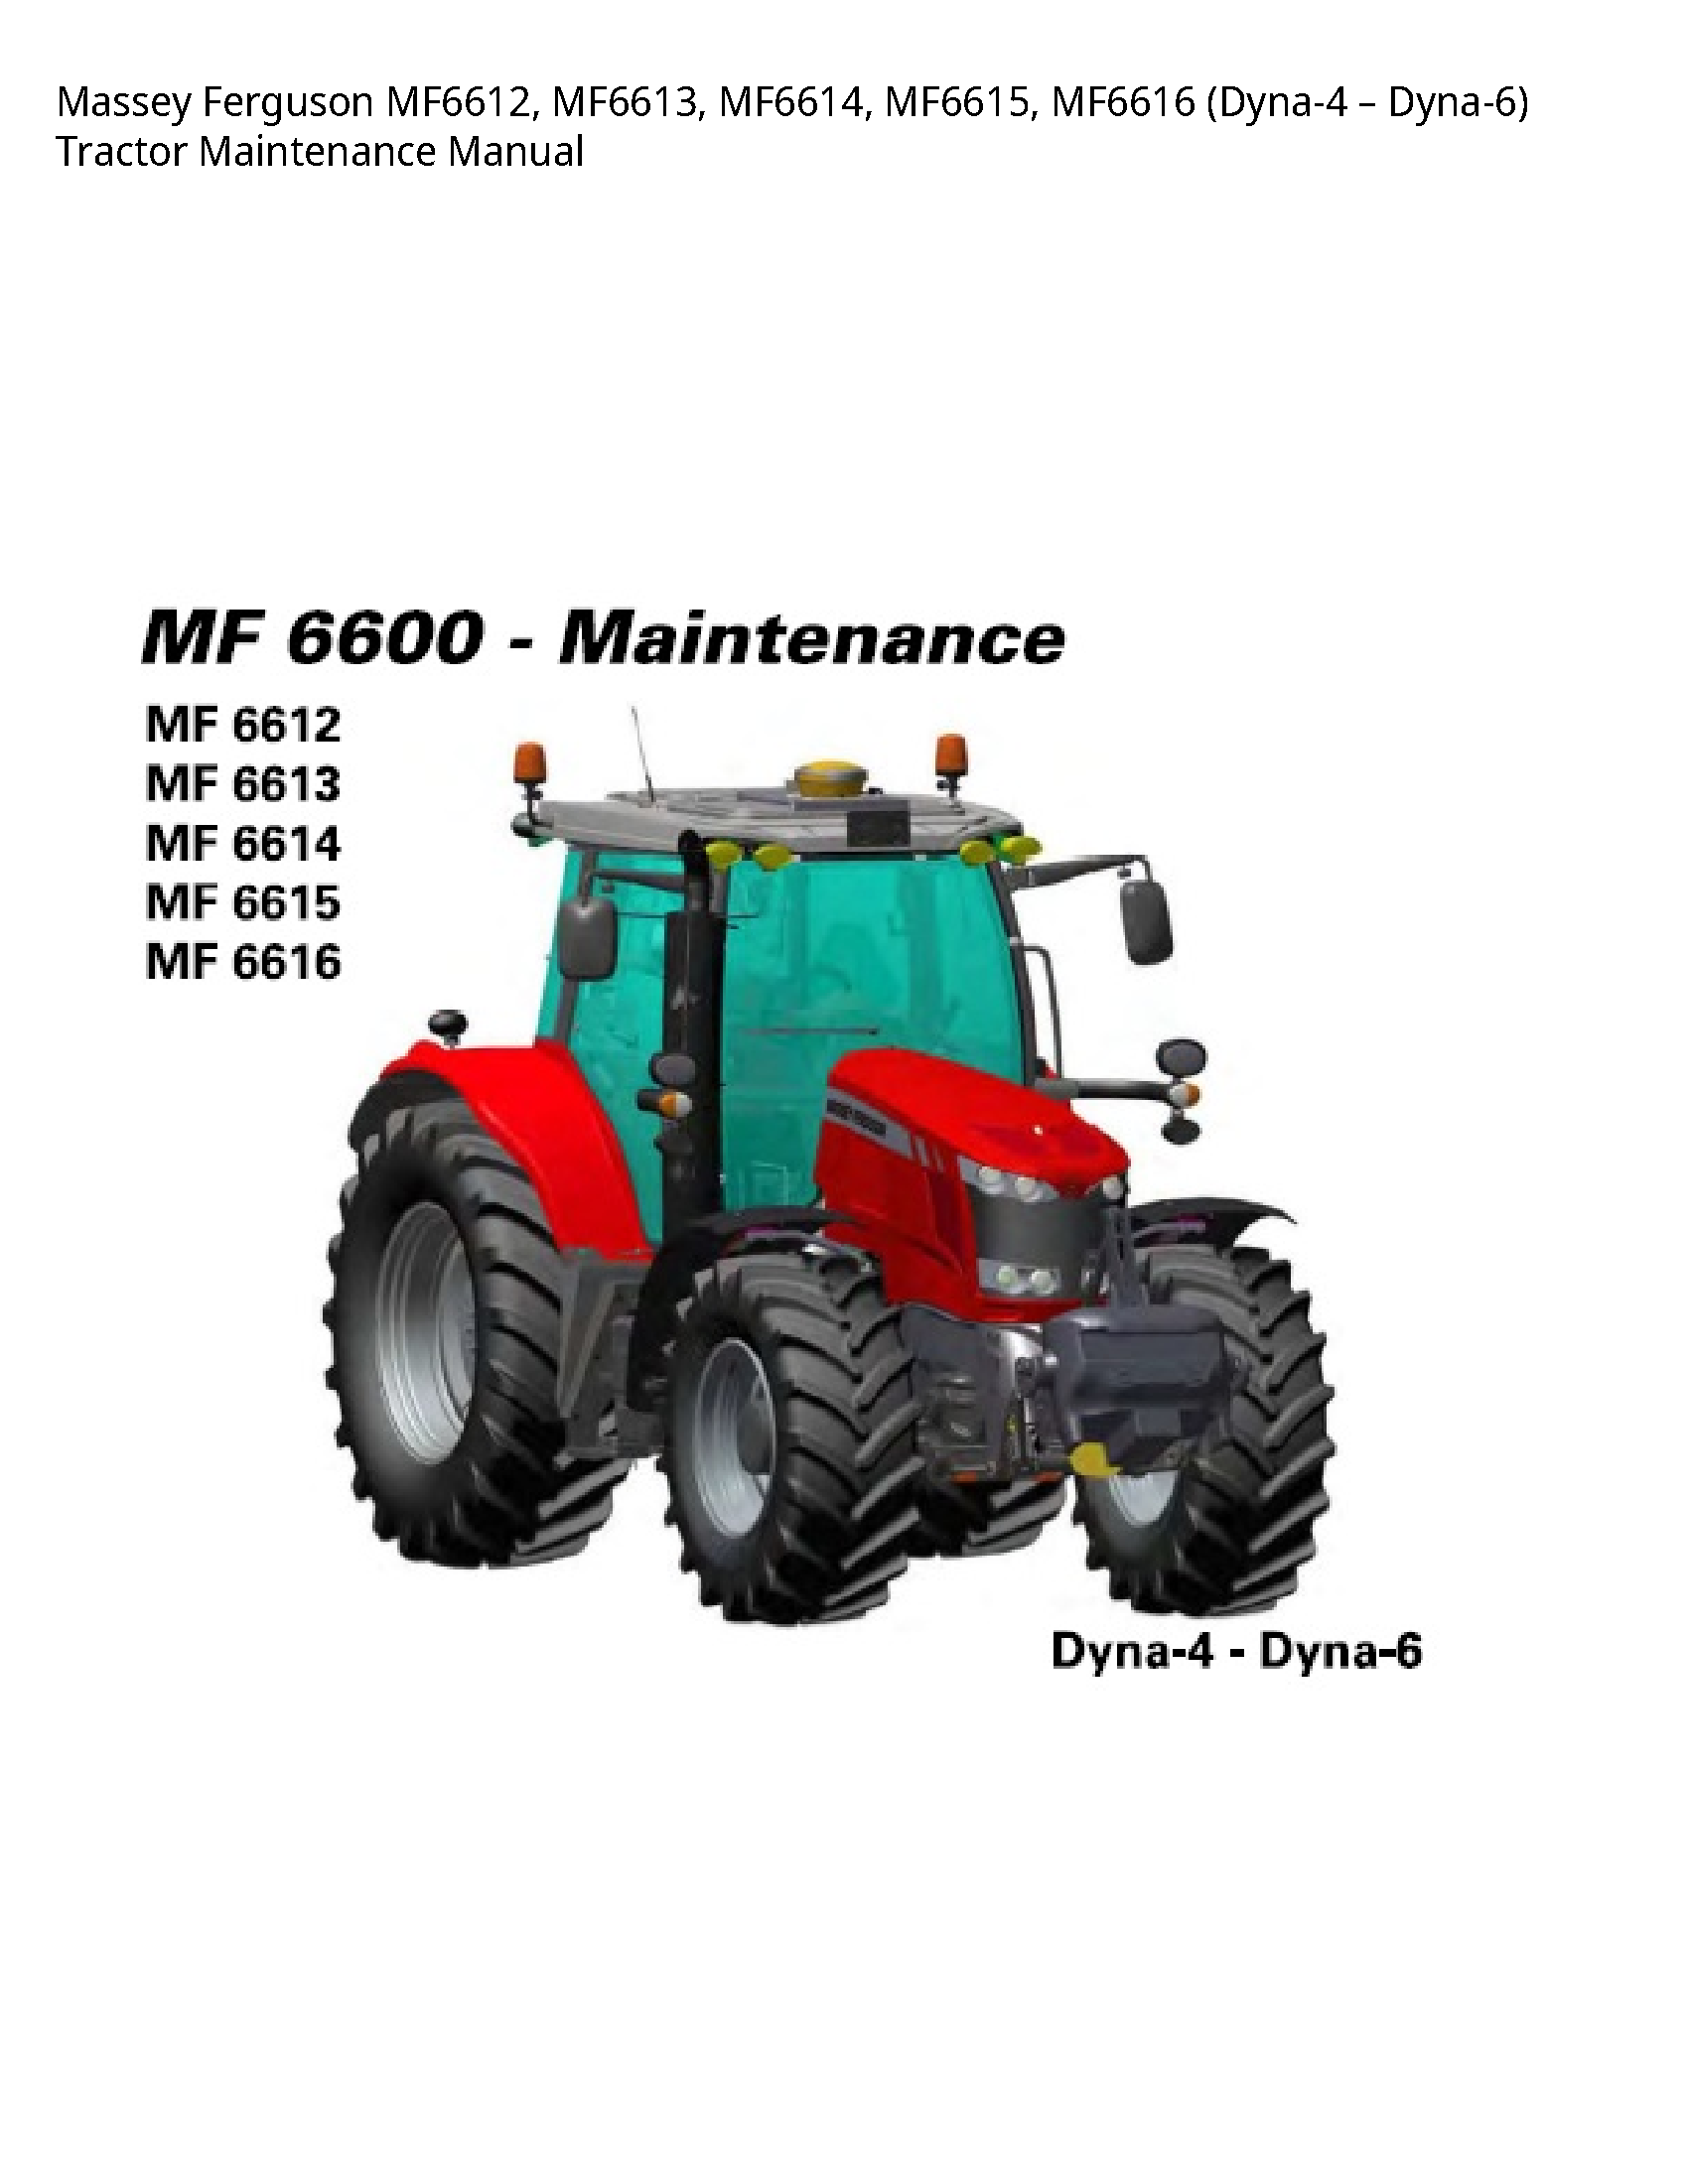 Massey Ferguson MF6612 Tractor Maintenance manual